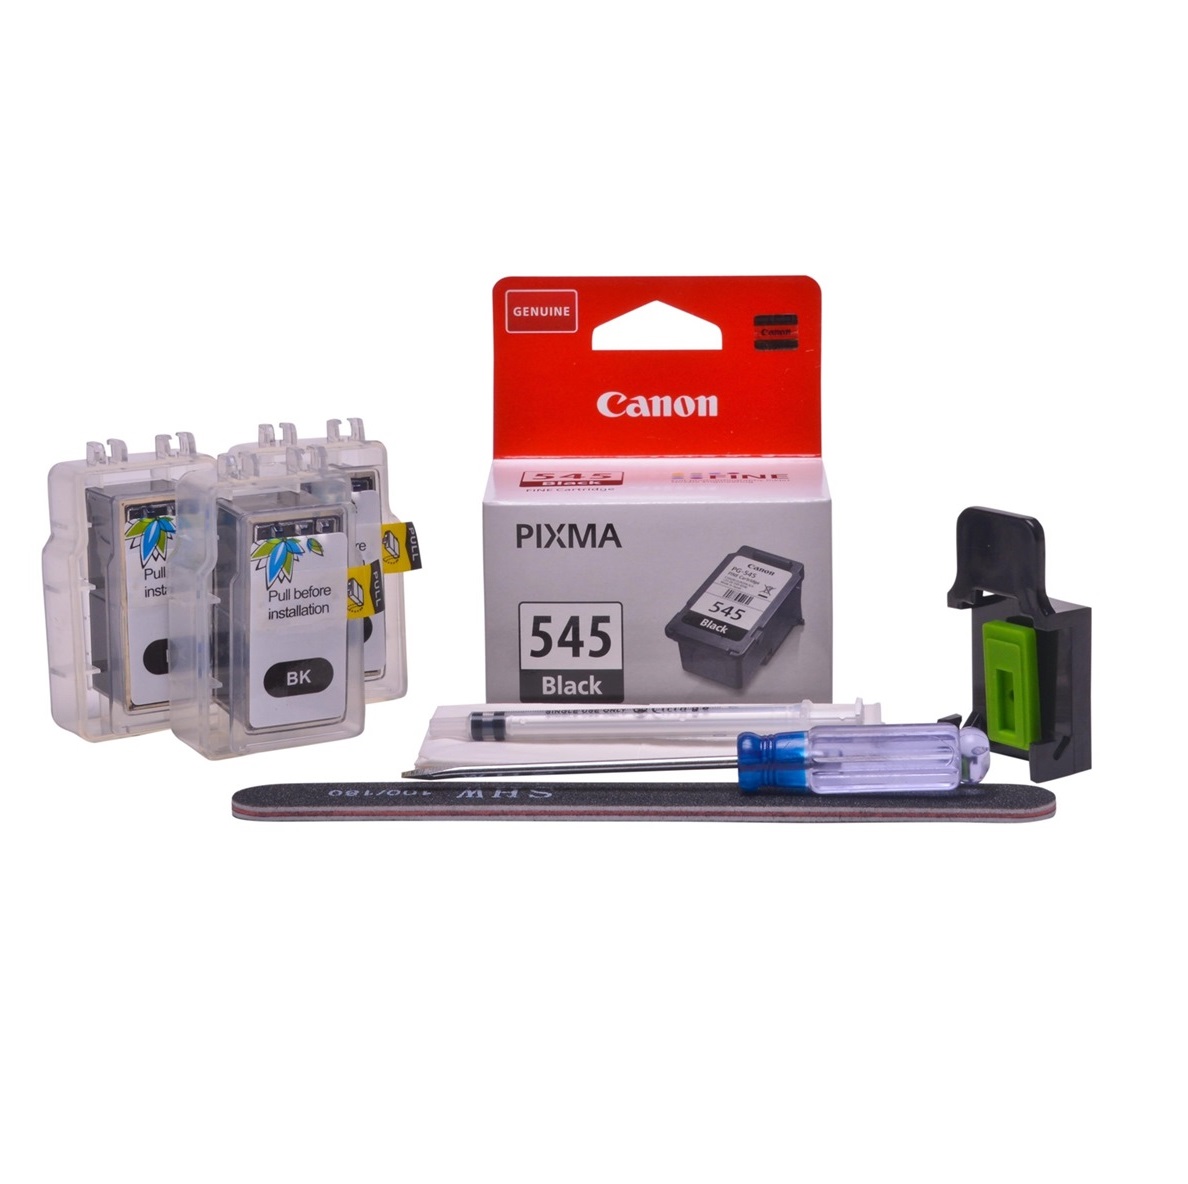 Canon TR4650 Ink Cartridges, Canon Pixma TR4650 Printer Ink